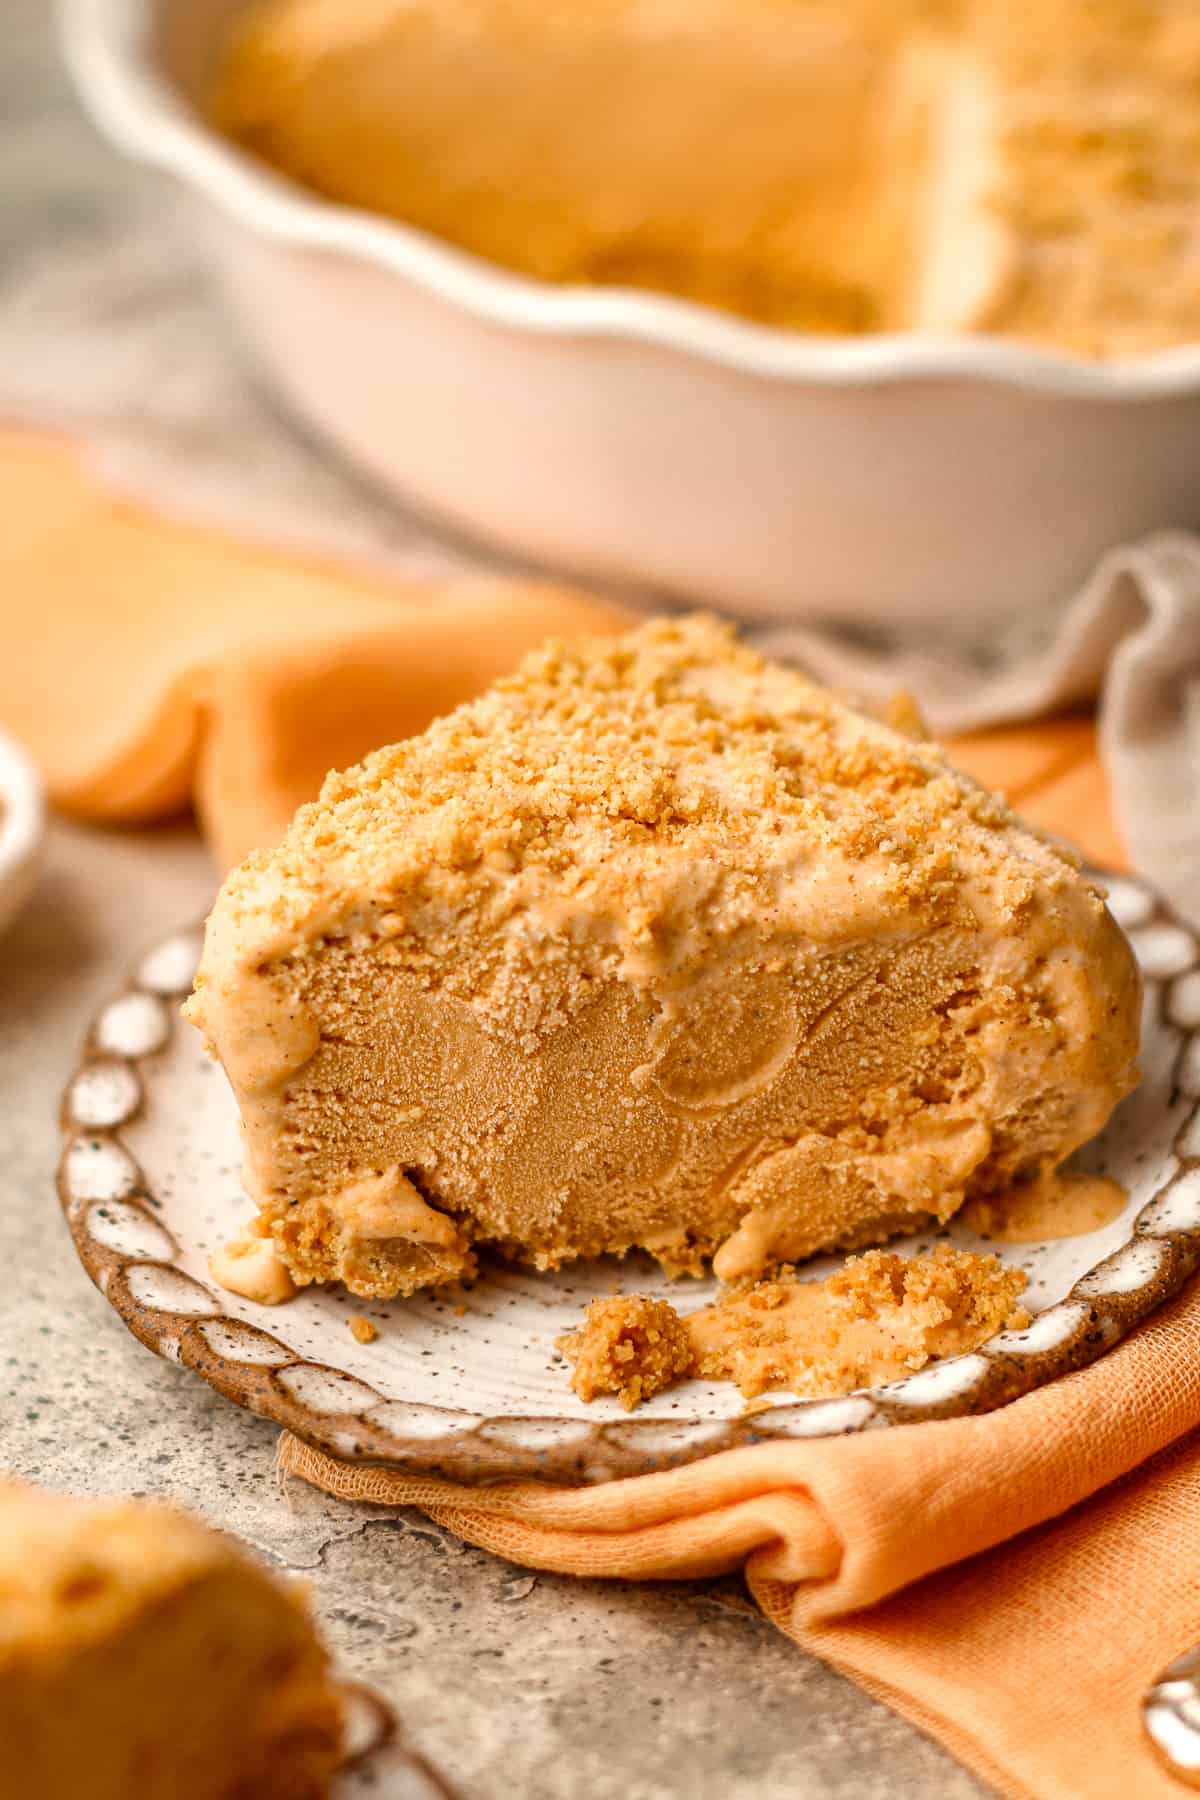 Pumpkin Ice Cream Roll Recipe: How to Make It